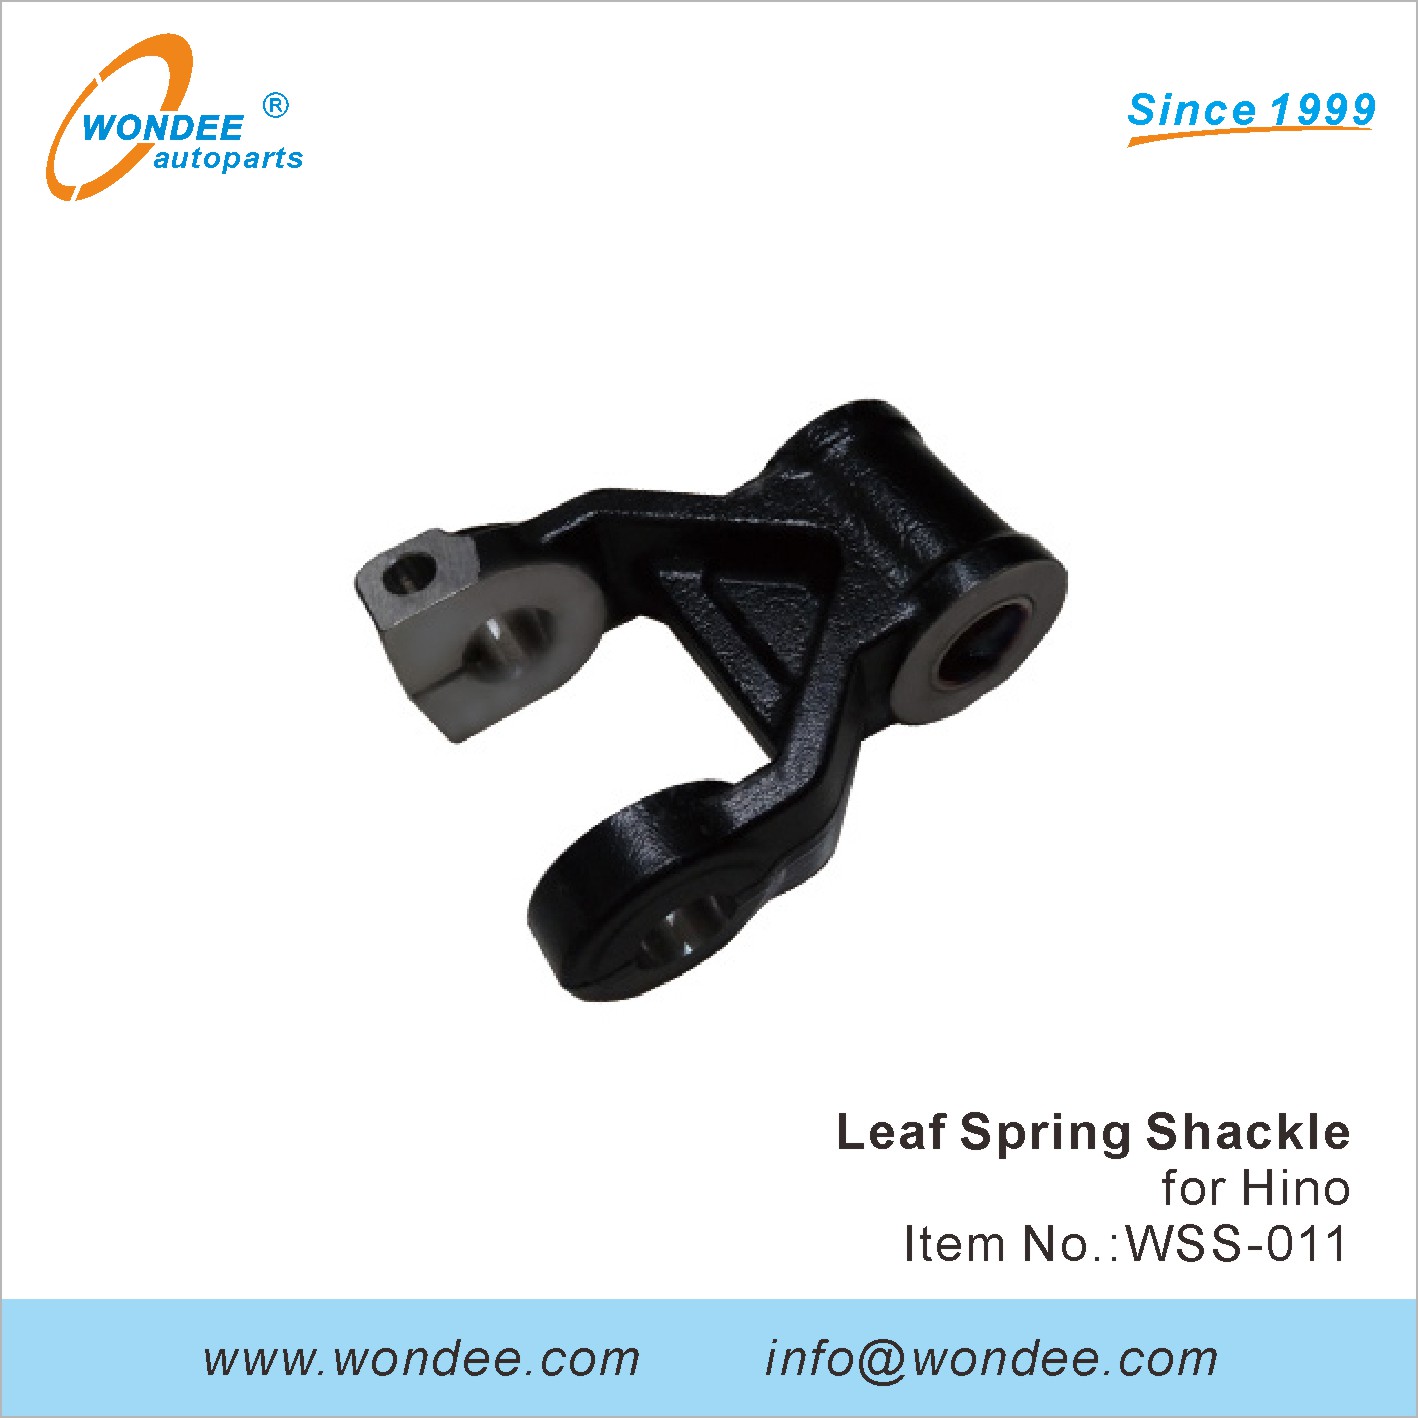 WONDEE leaf spring shackle (11)